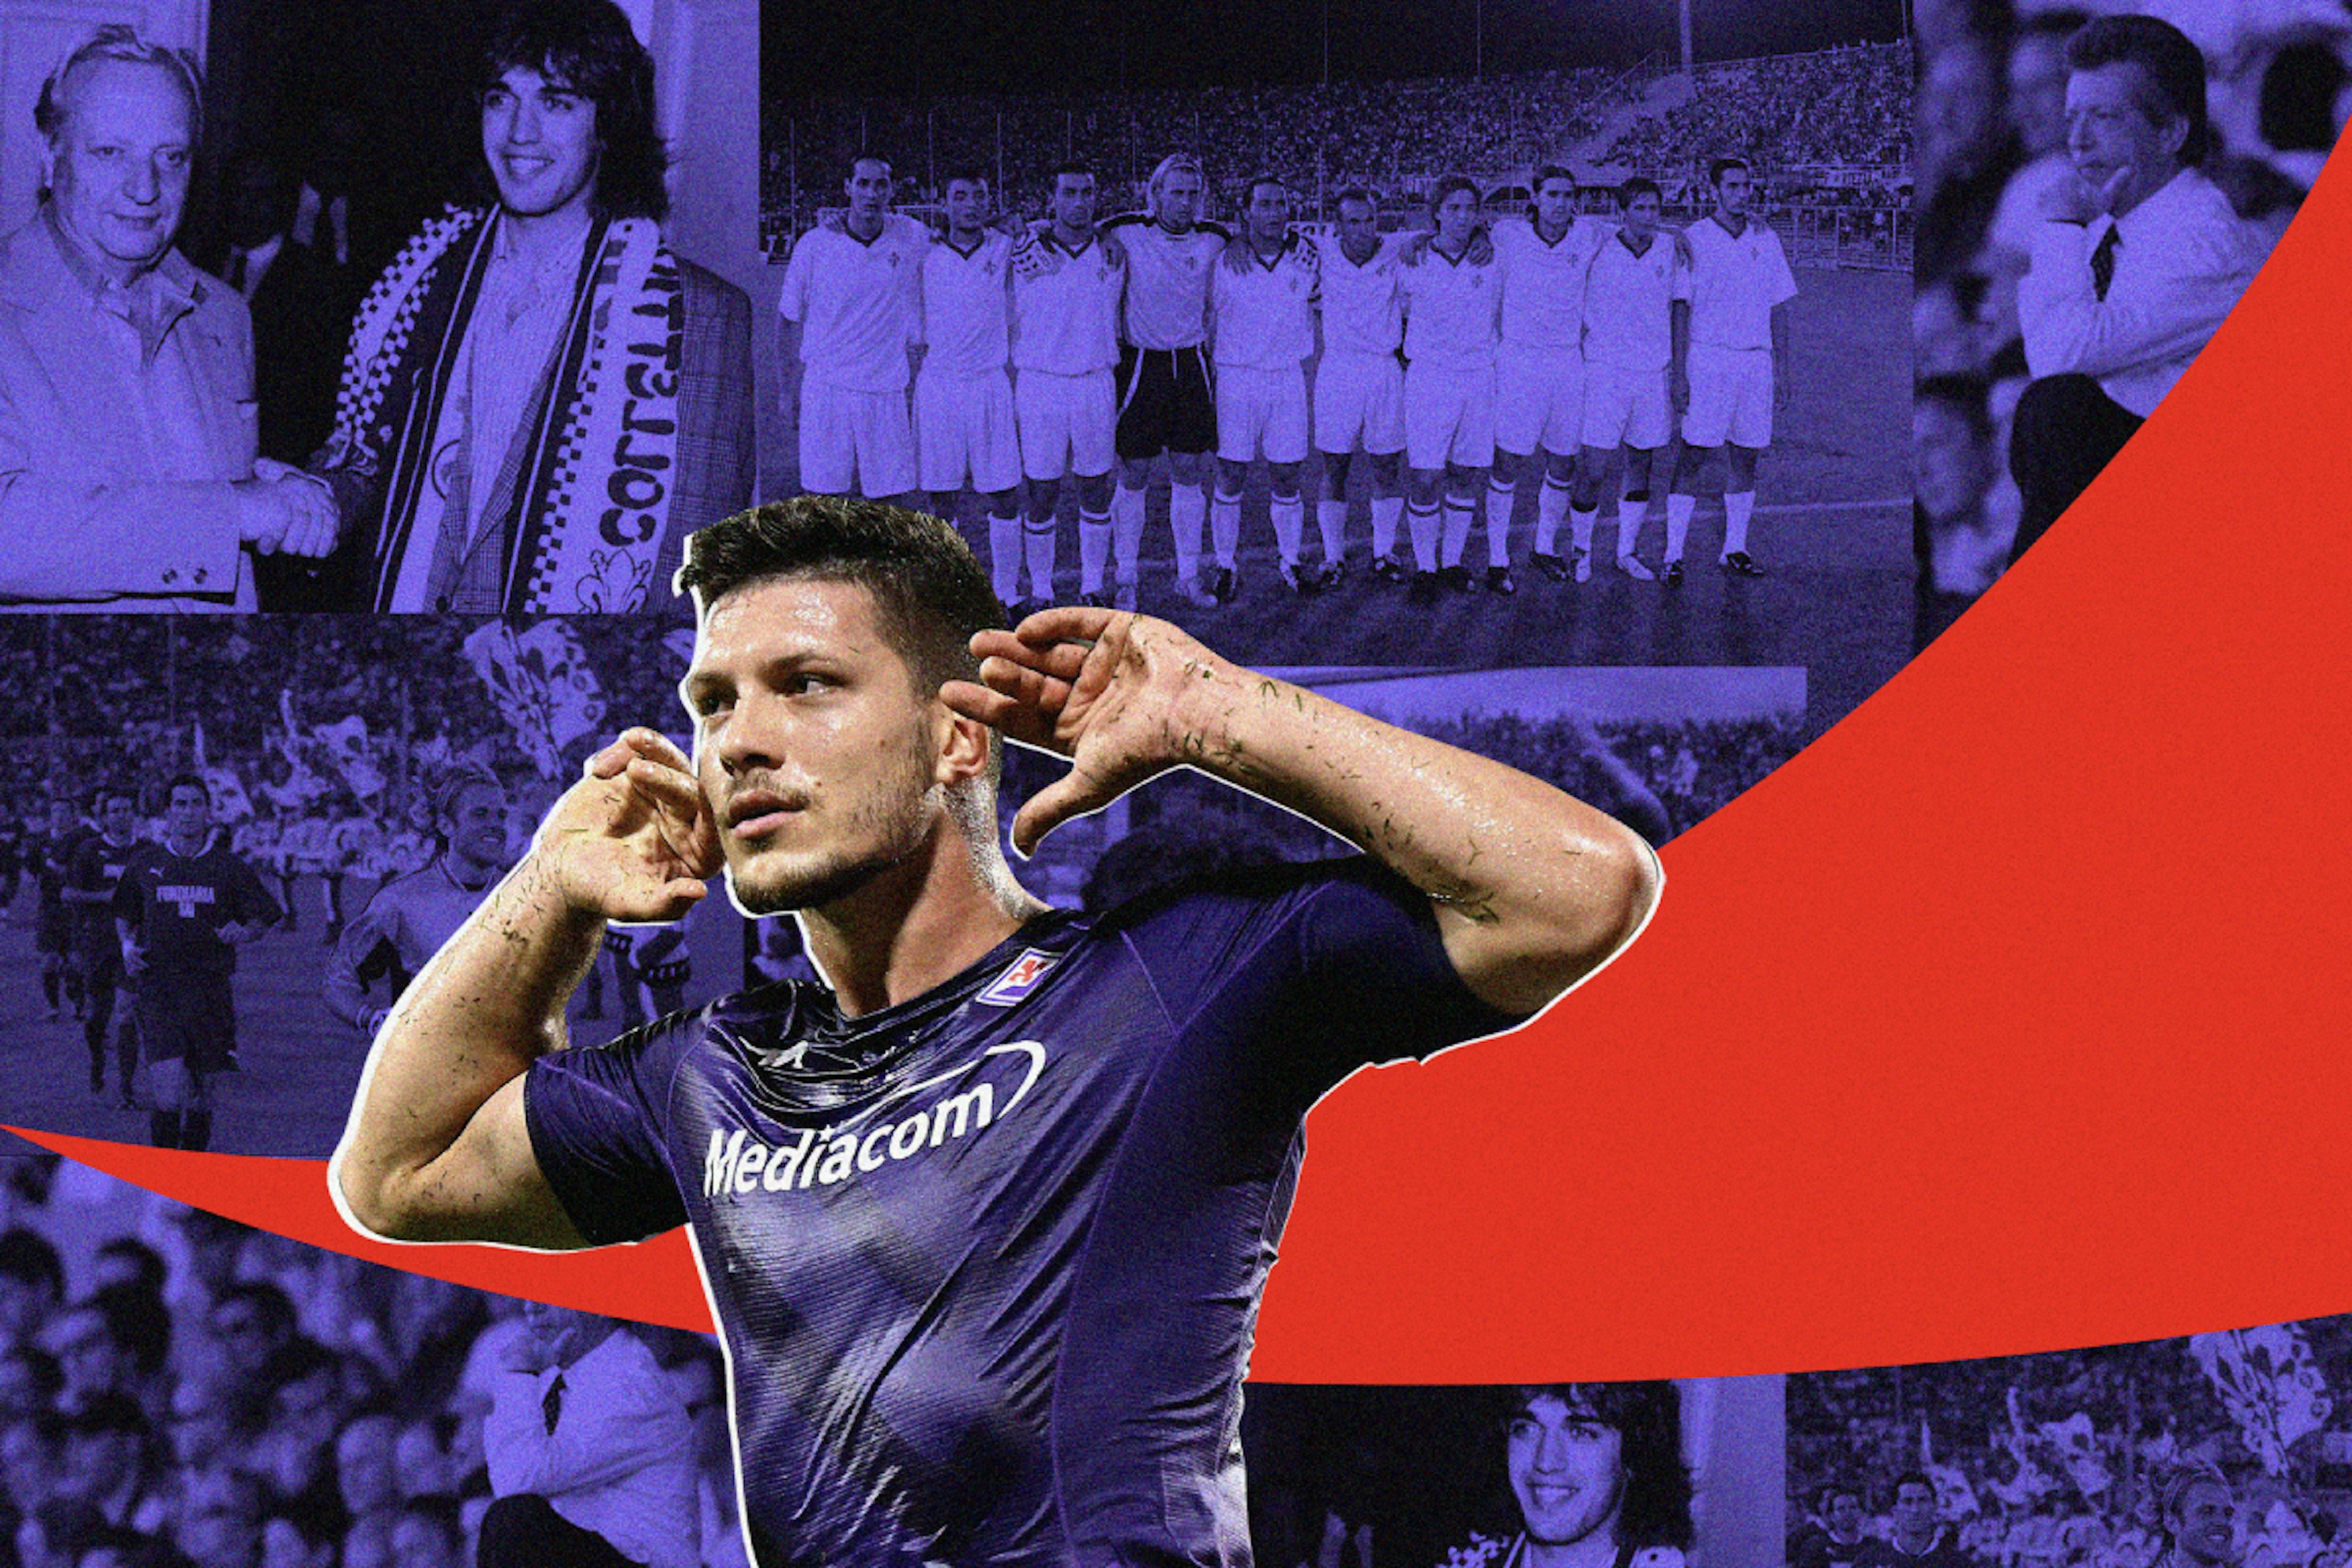 Cover Image for Fiorentina: From Cecchi Gori to Double Glory?